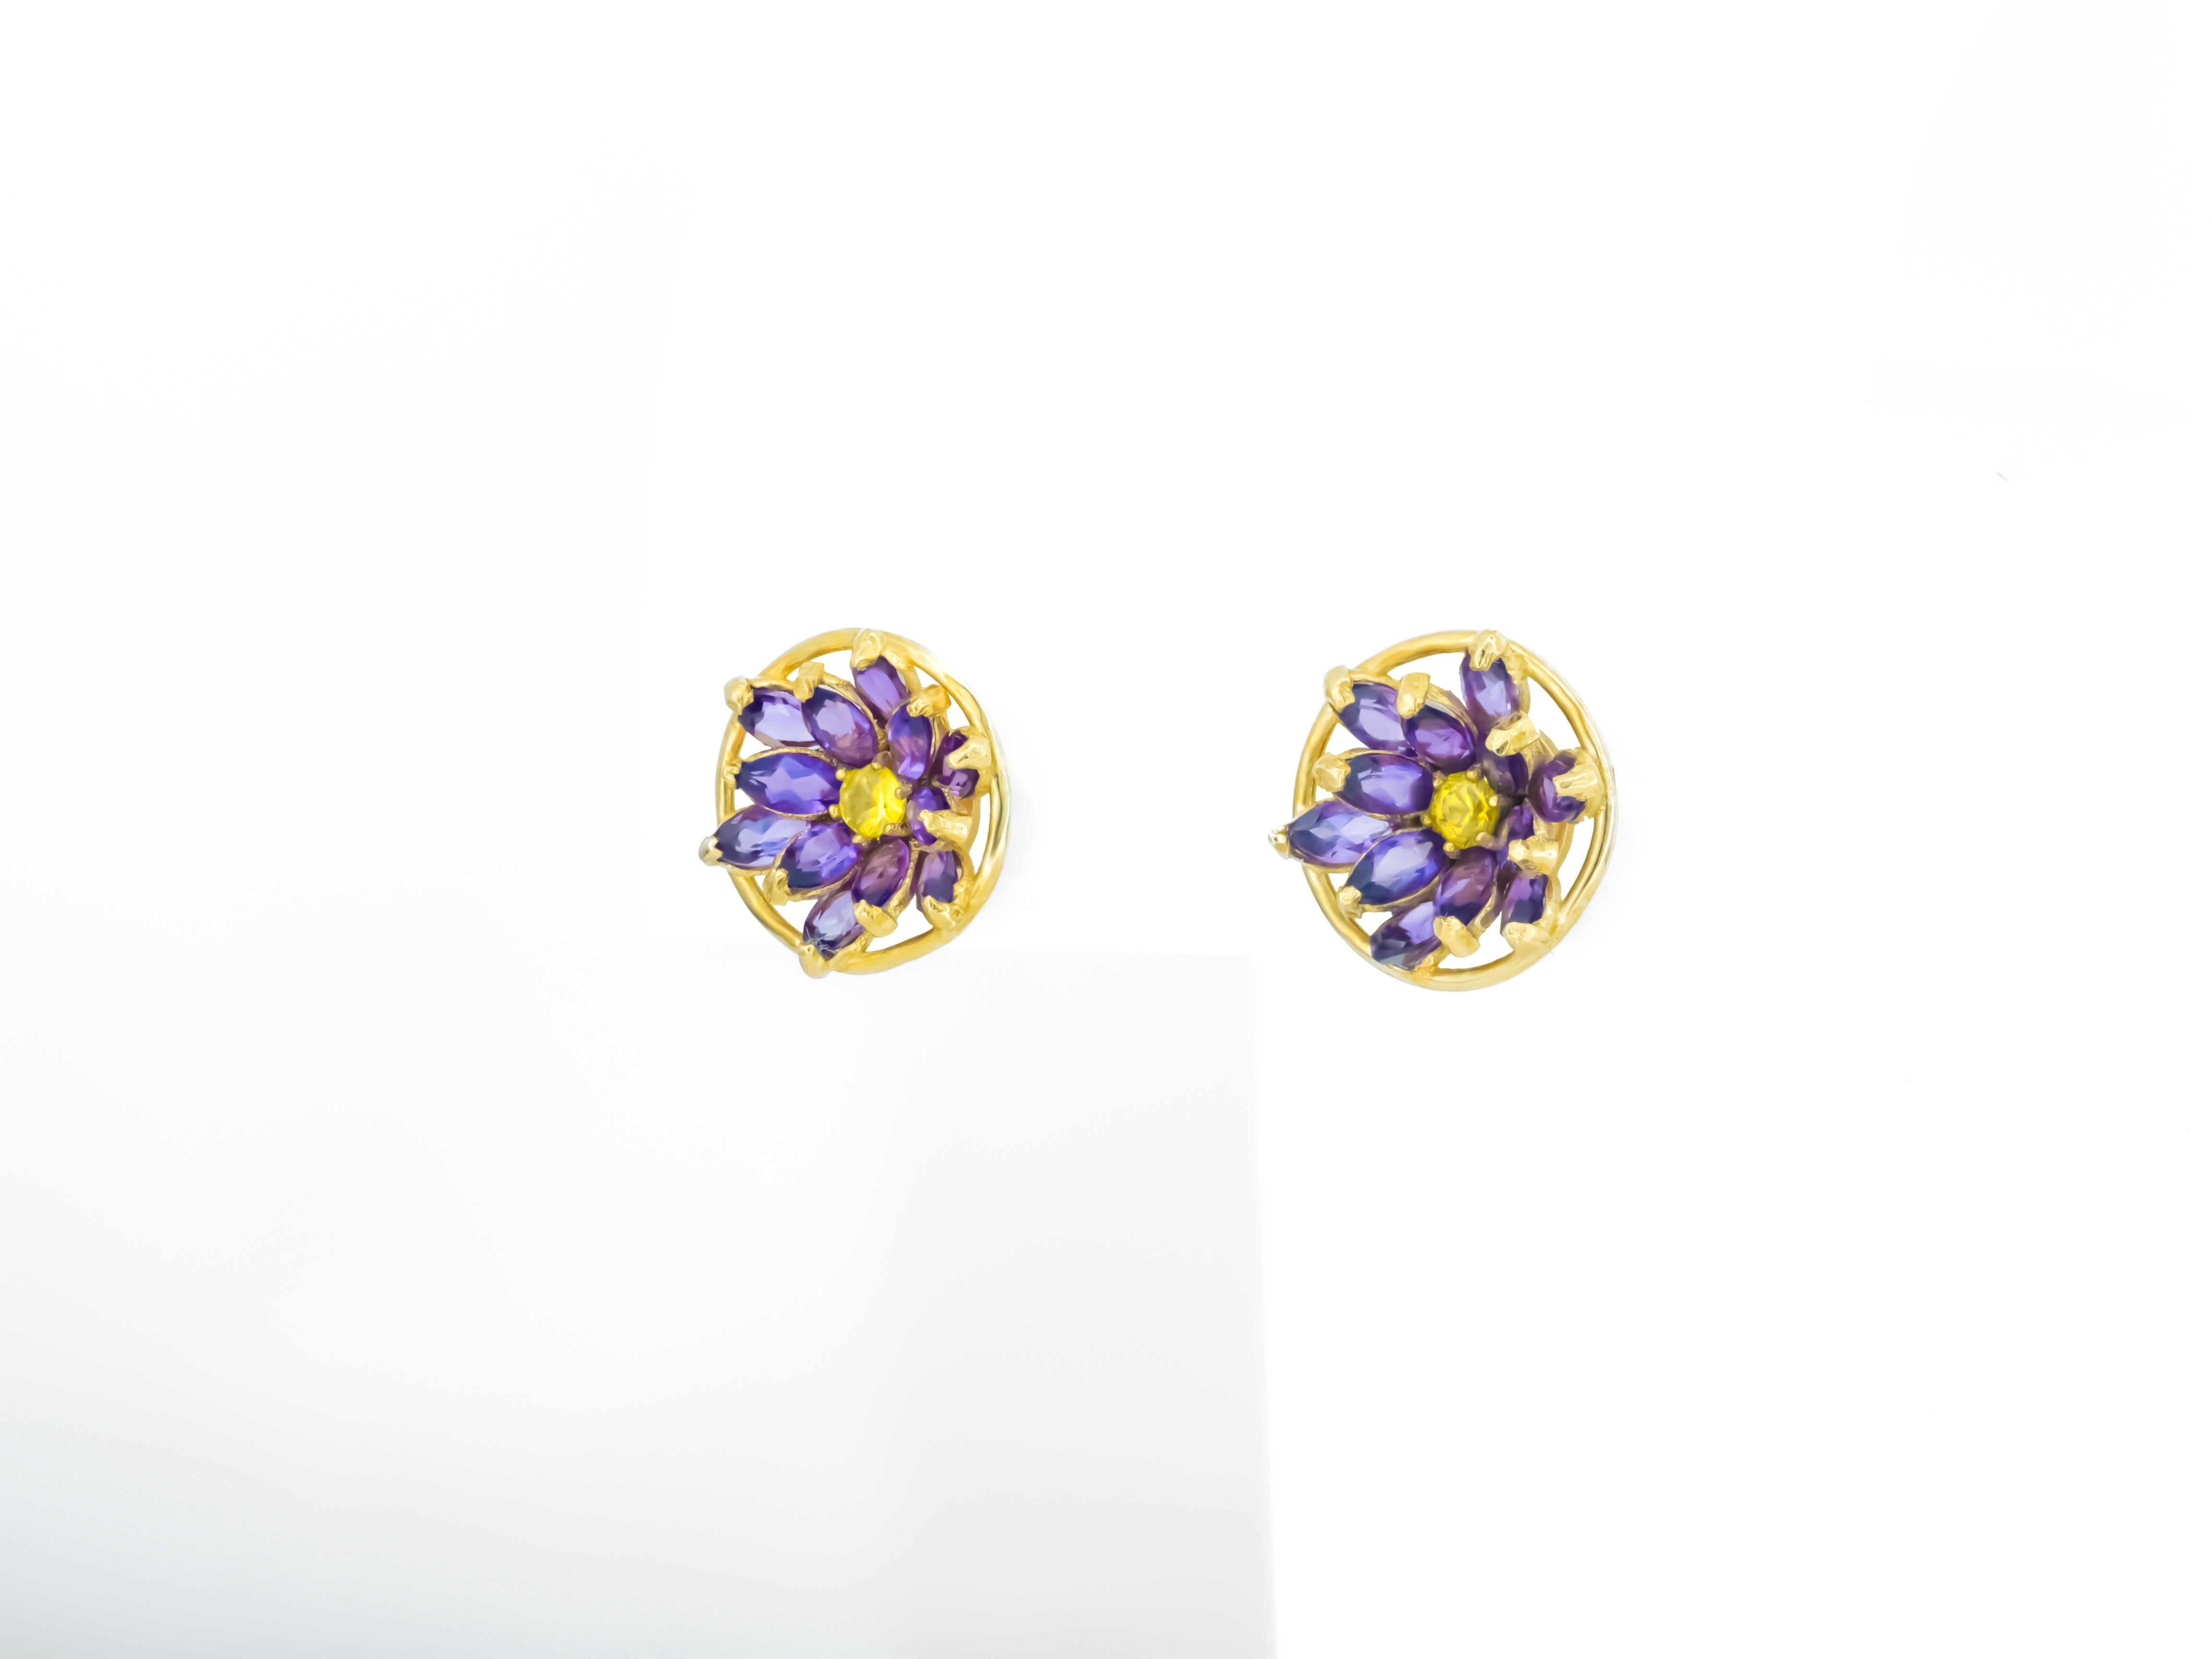 Lotus Flower Earrings Studs in 14K Gold, Amethyst and Sapphires Earrings! For Sale 2